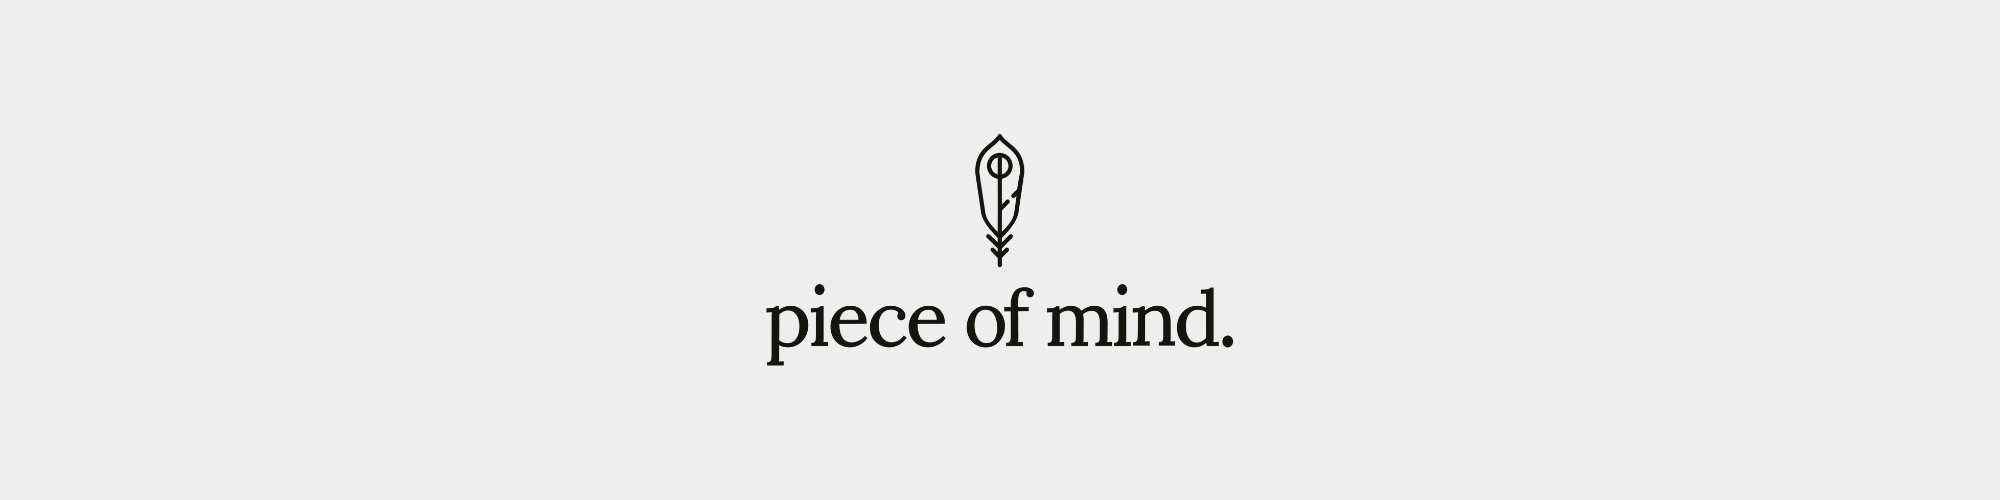 piece of mind